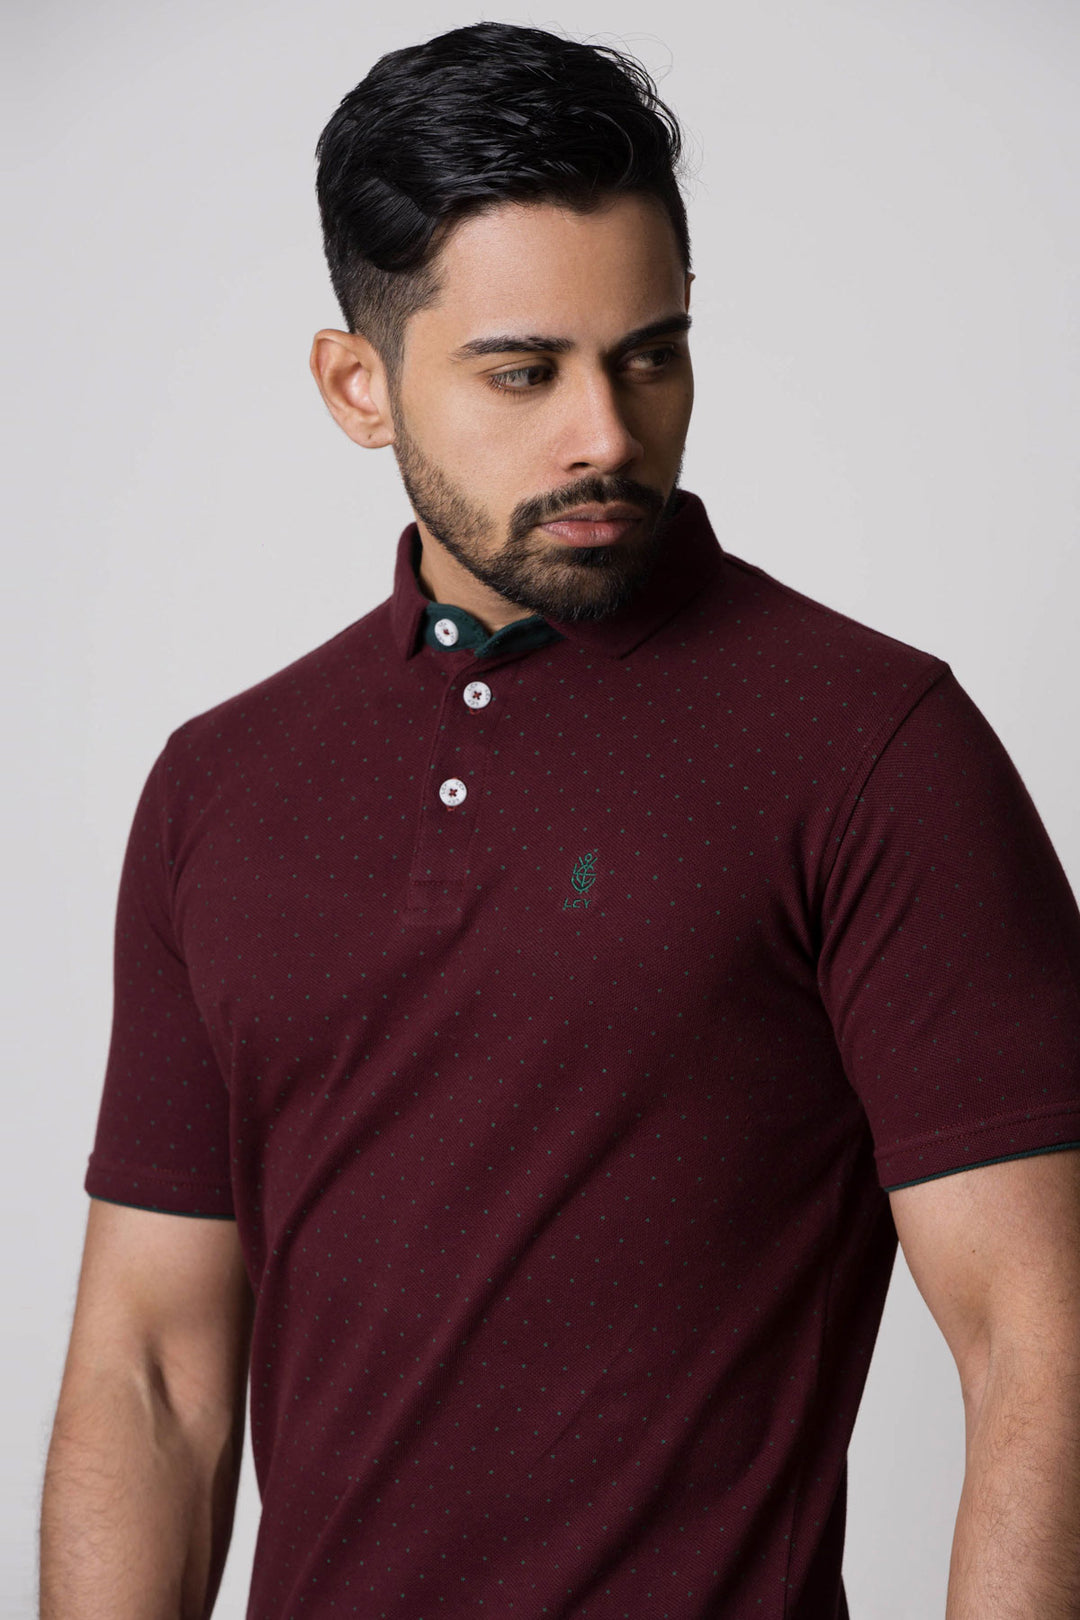 LCY | Premium Men's Polka Dot Polo Shirt LCY